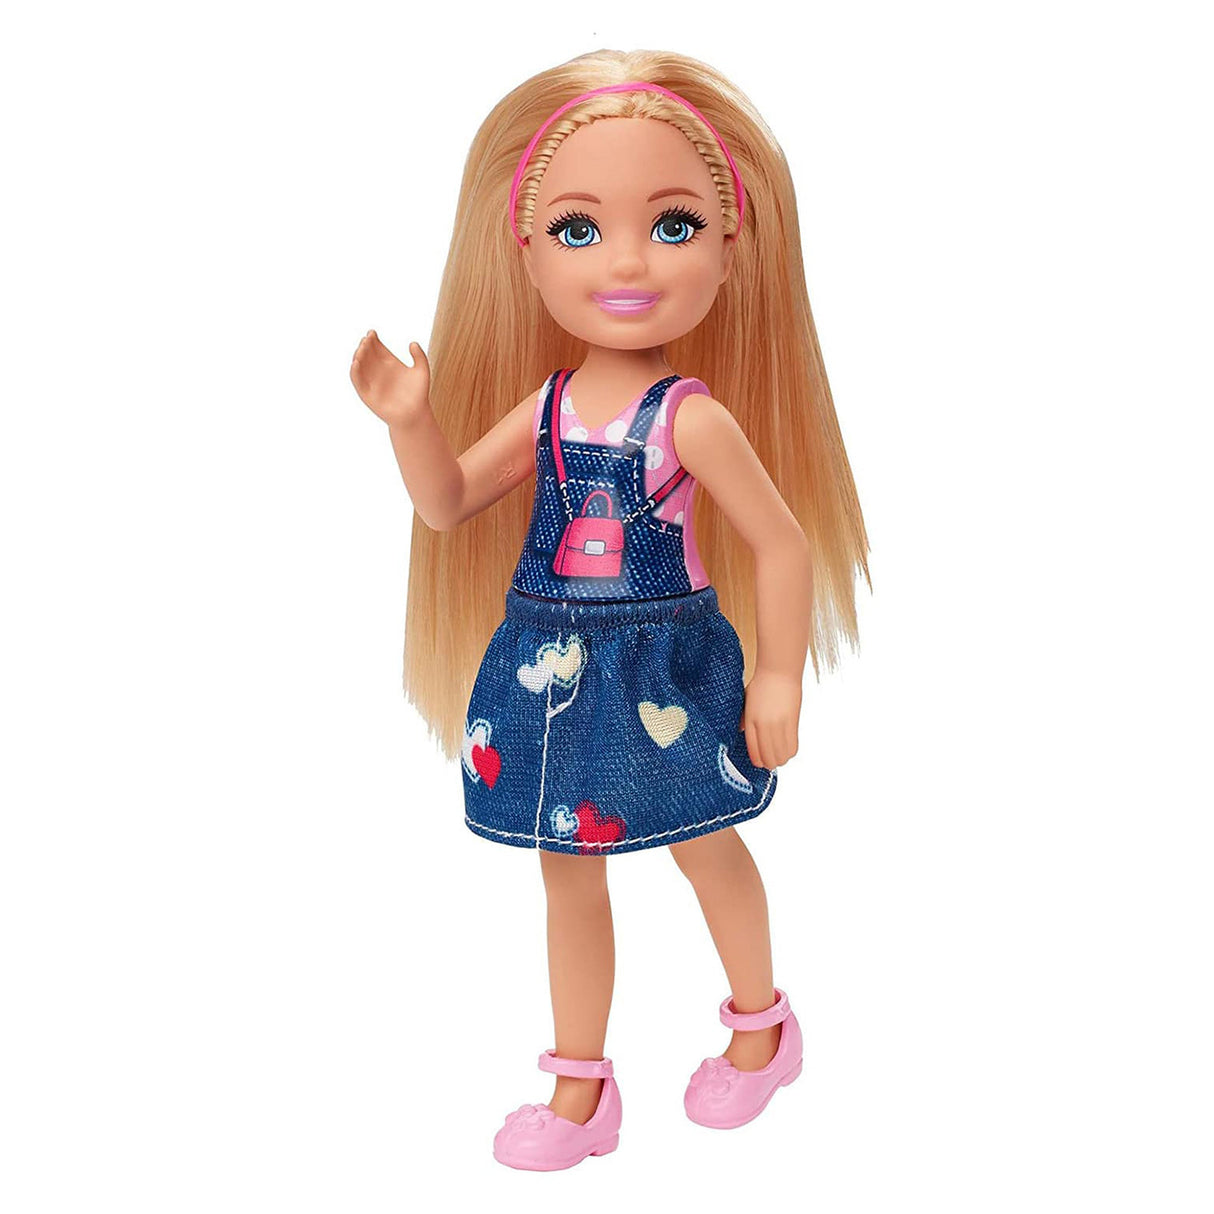 Barbie Club Chelsea Doll - Blonde Doll In Heart Theme